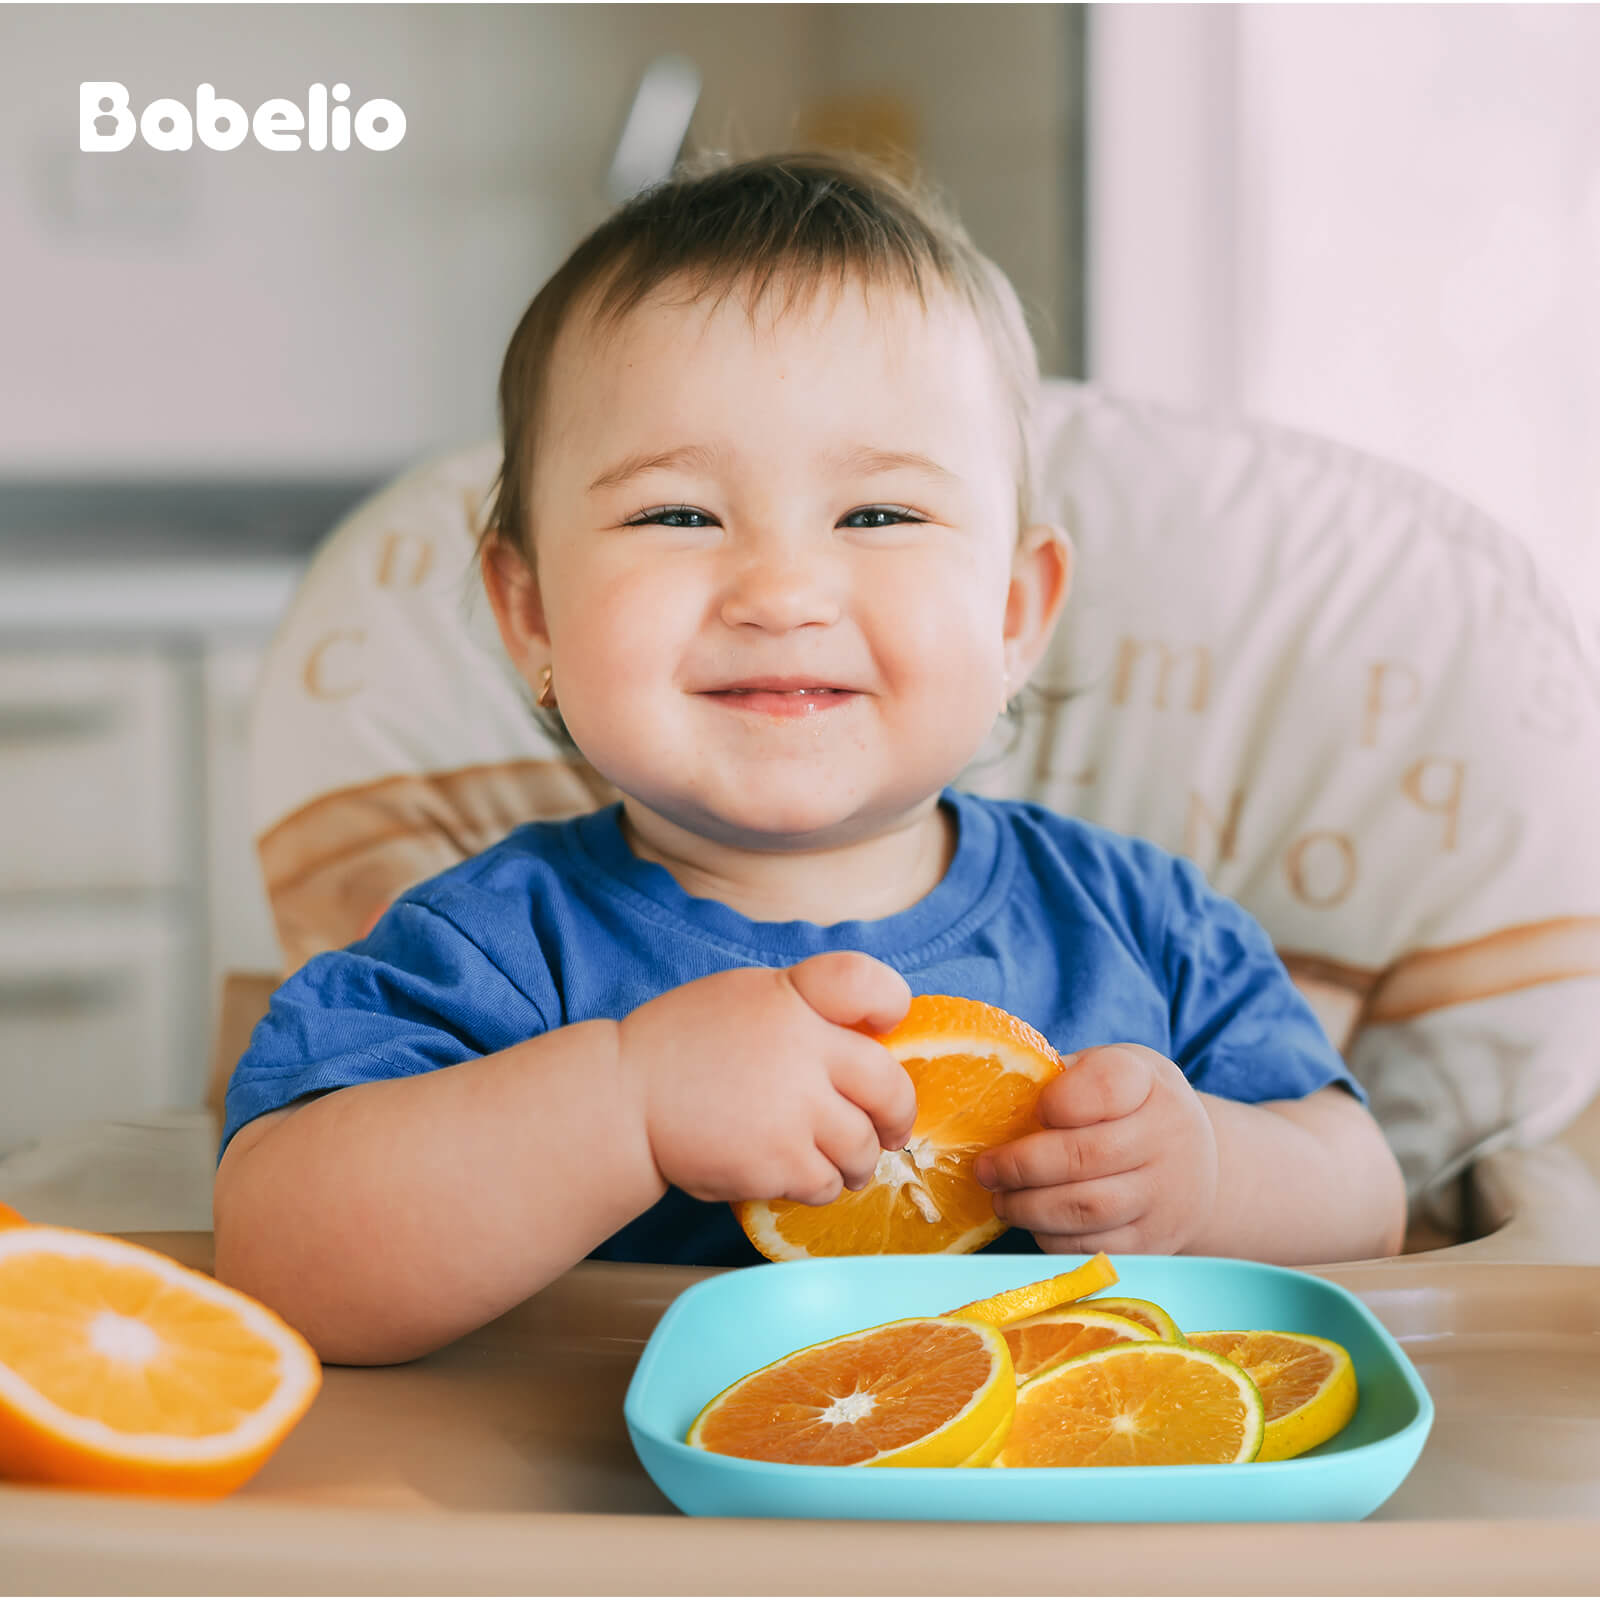 Babelio New Basics Silicone Toddler Plates 2 Pack (Sky Blue) - babeliobaby